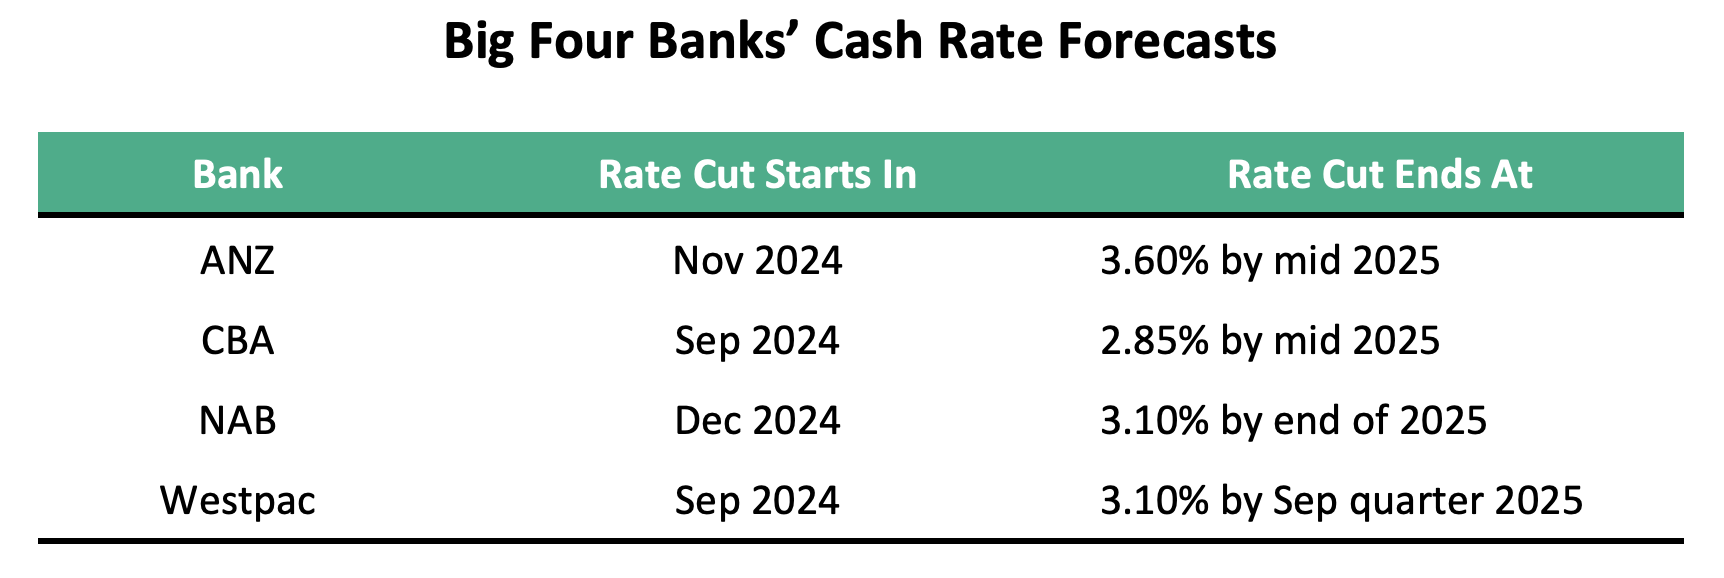 Image of Big 4 banks cash rate forecasts